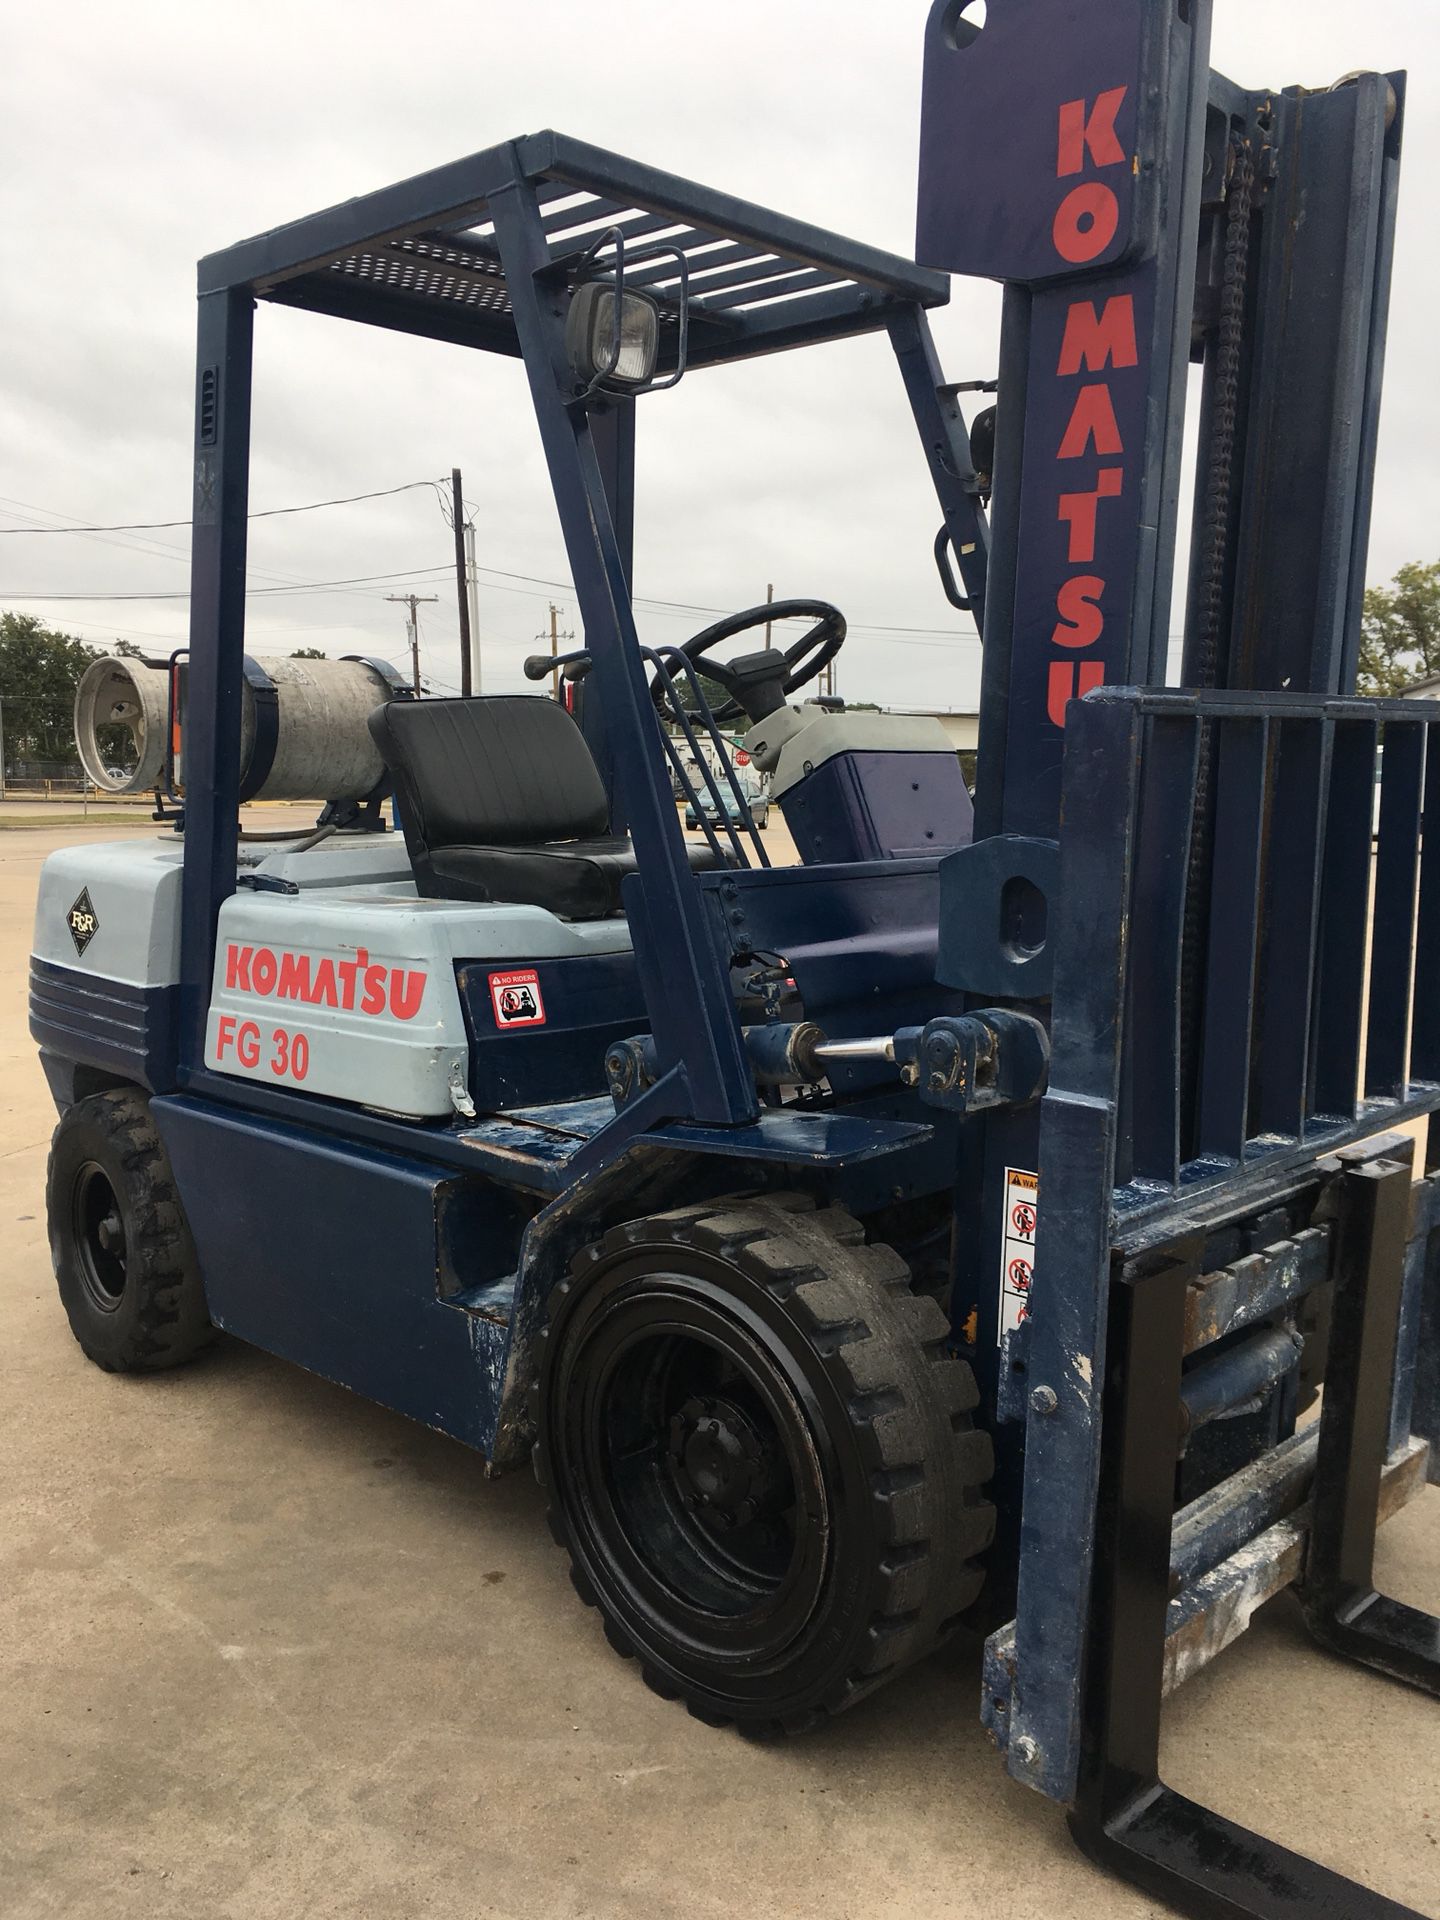 Forklift komatsu 6000 lbs capacity